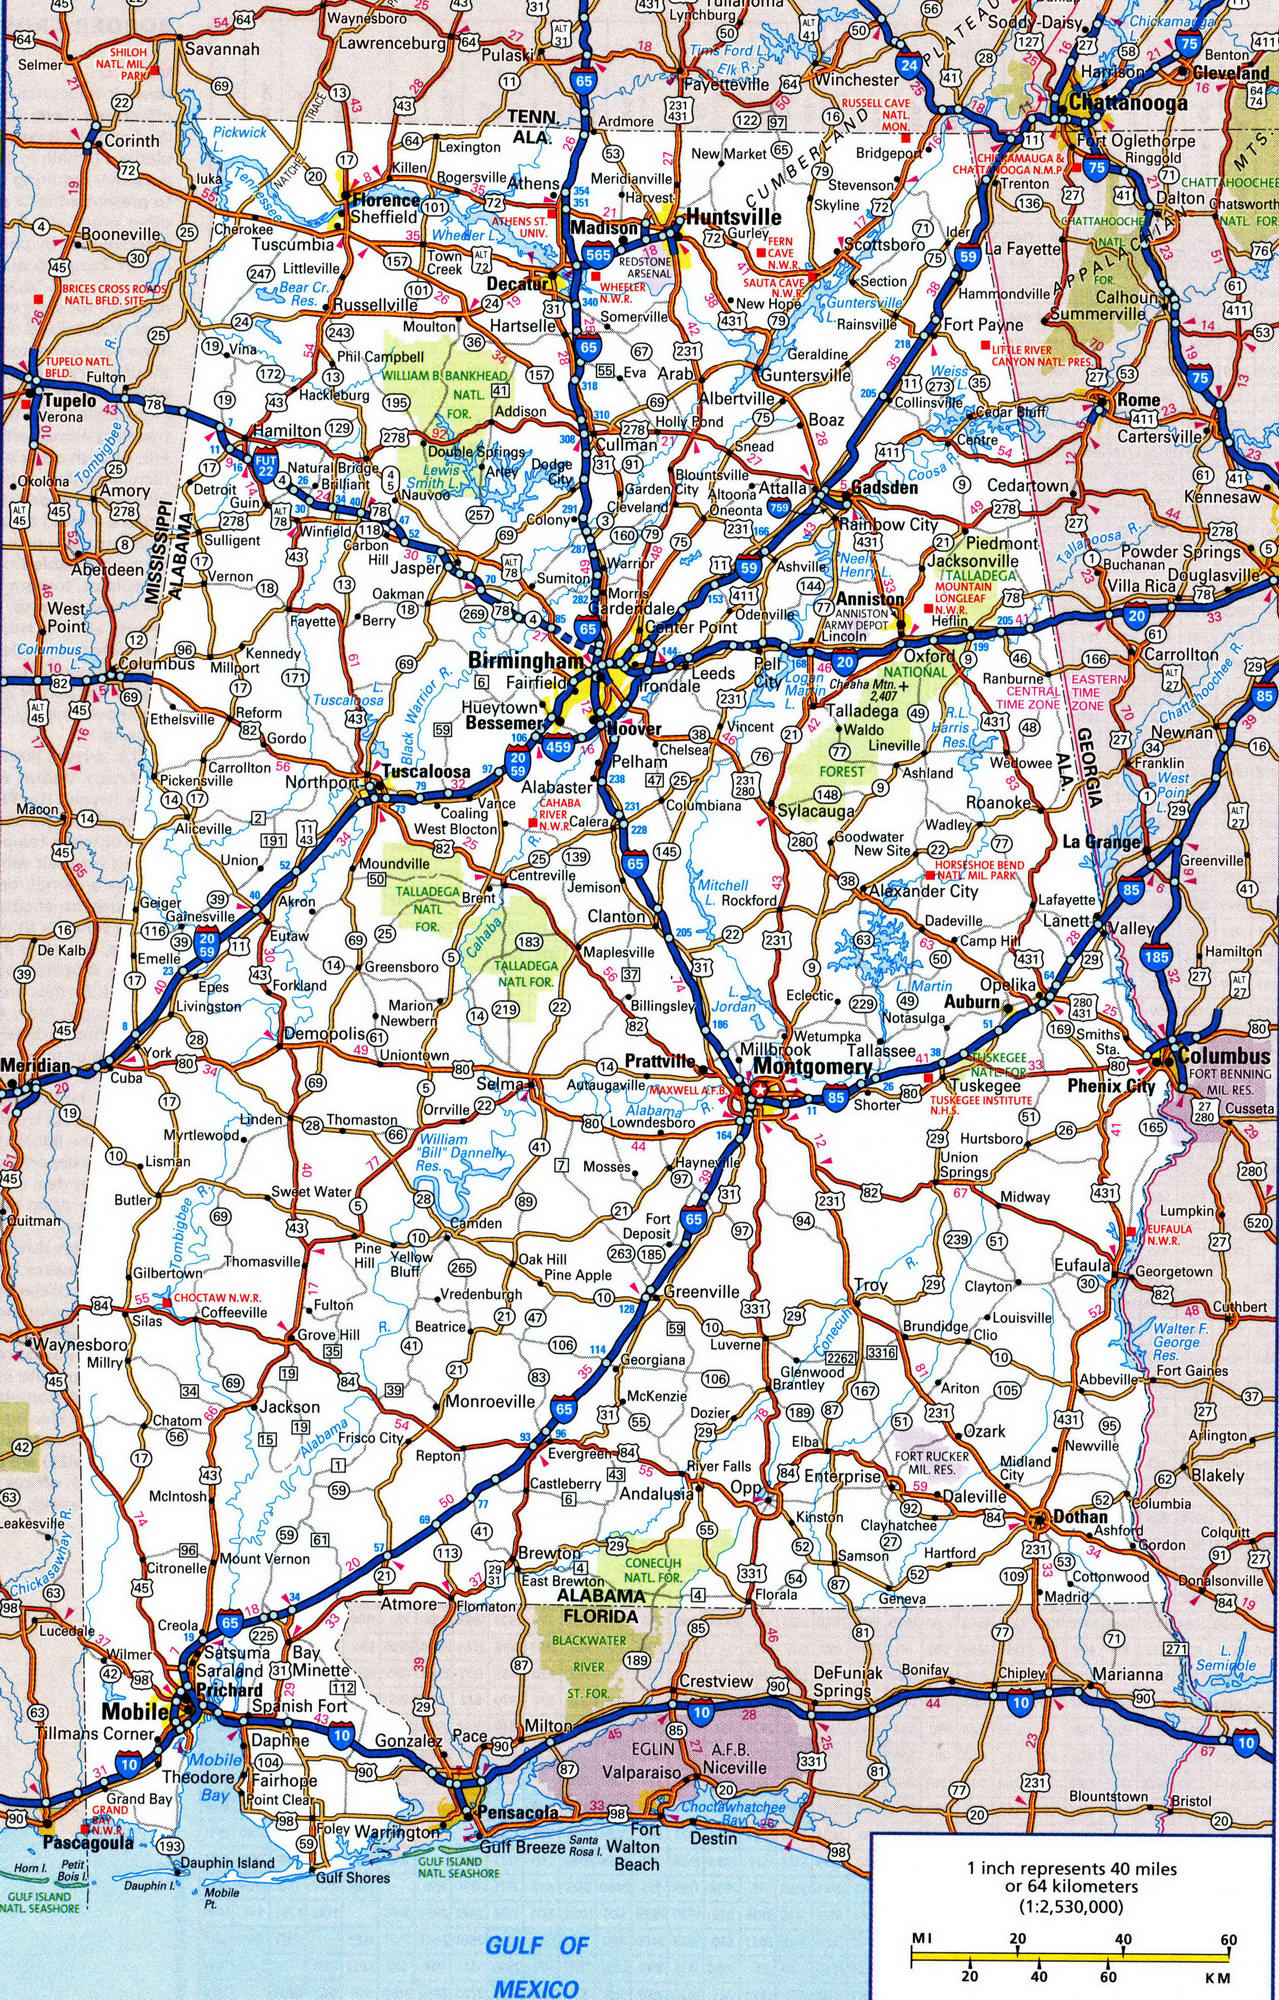 Detailed roads map of Alabama